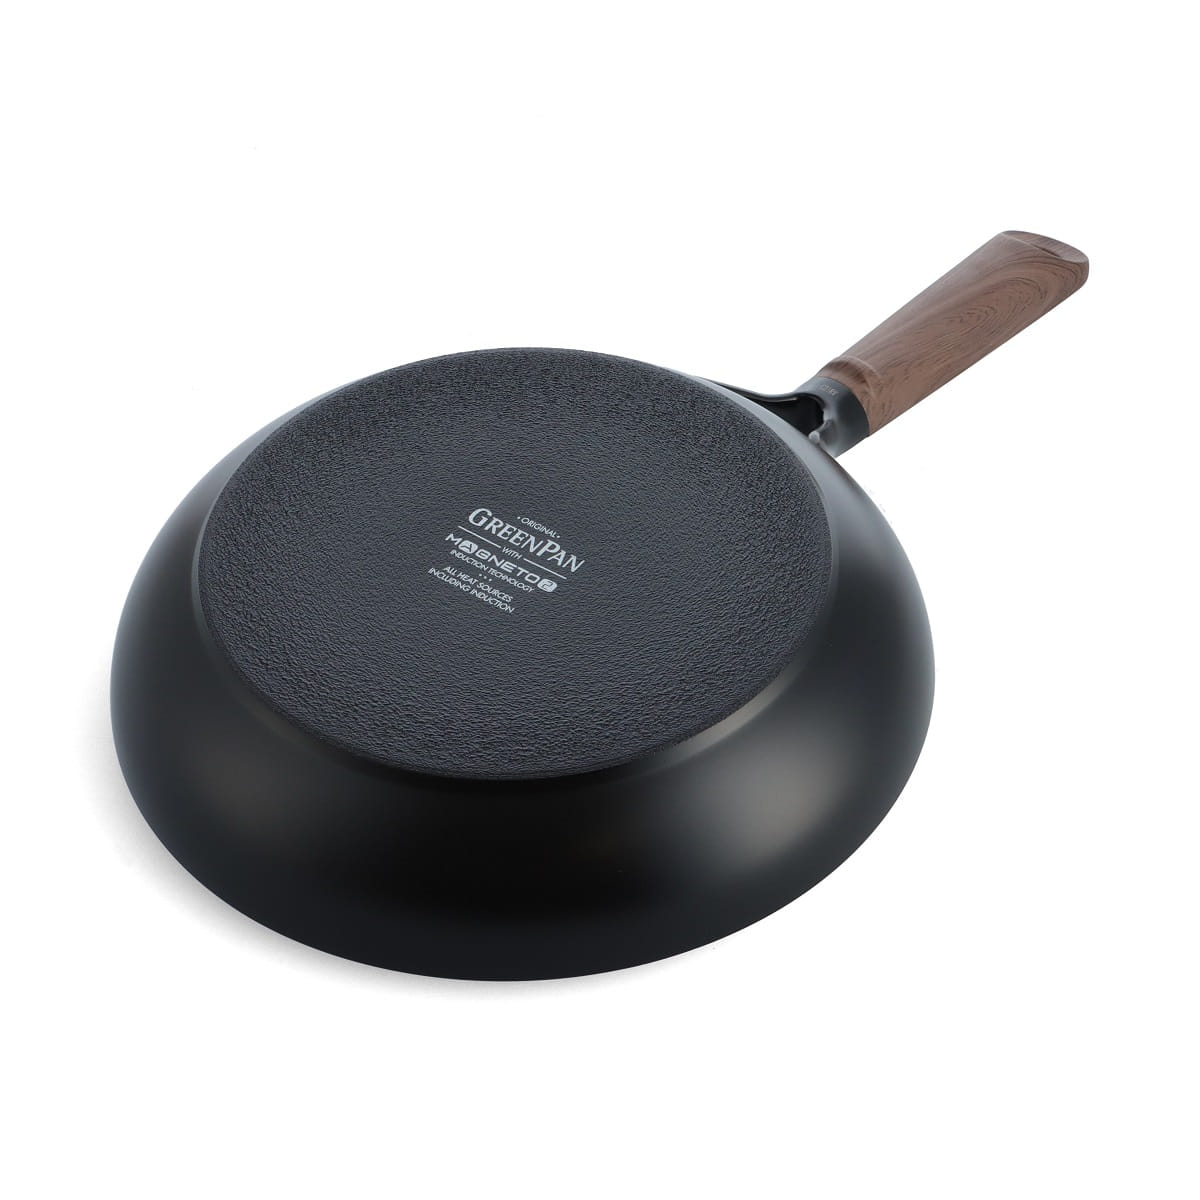 CC006442-001 - Eco Smartshape Frying Pan, Dark Wood - 28cm - Product Image 3